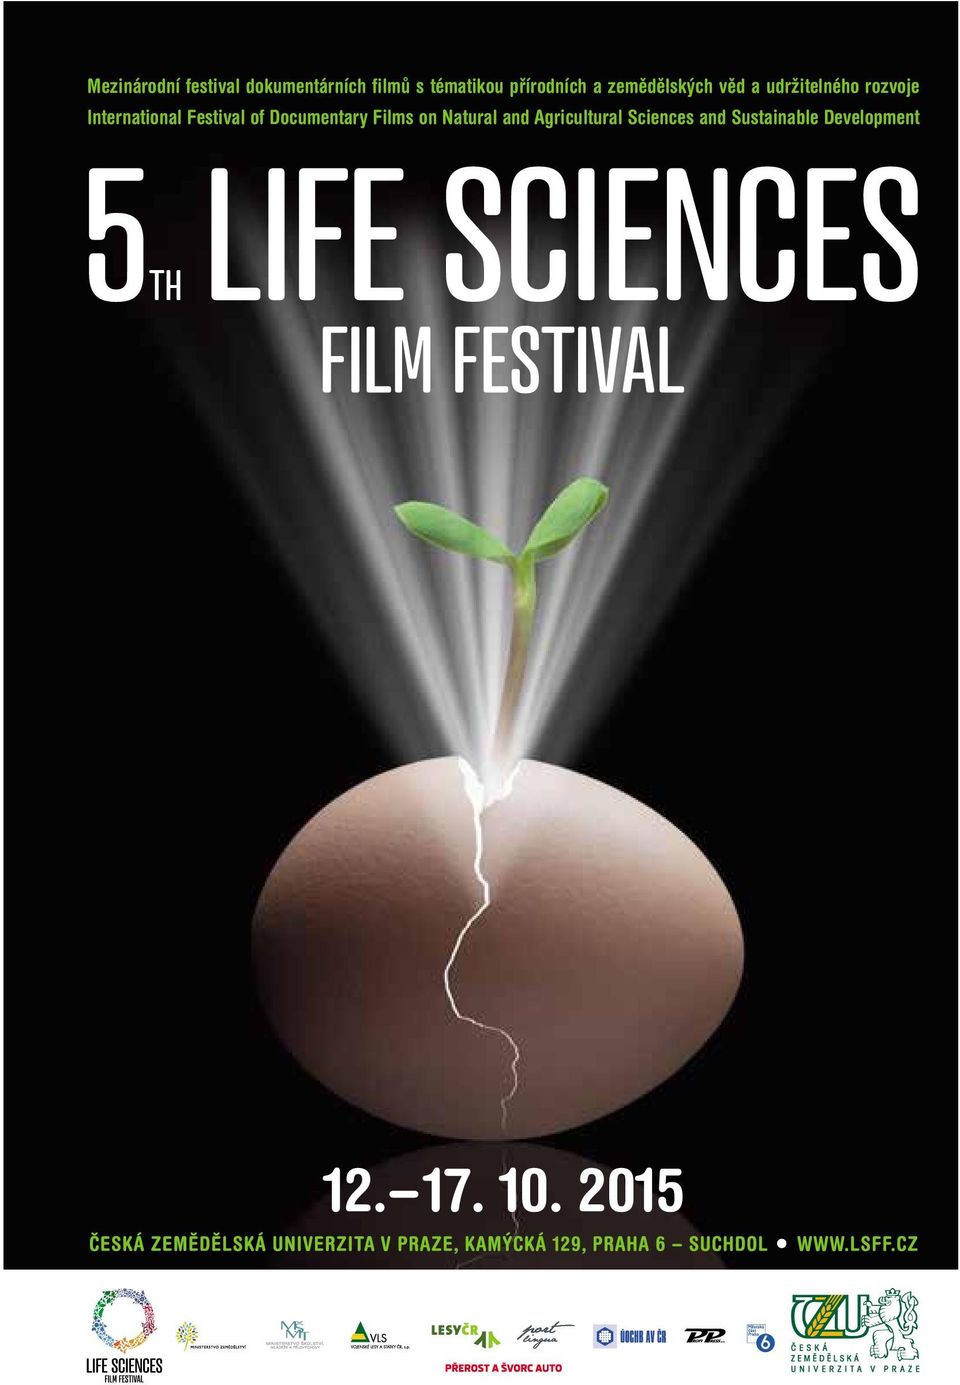 International Festival of Documentary Films on Natural